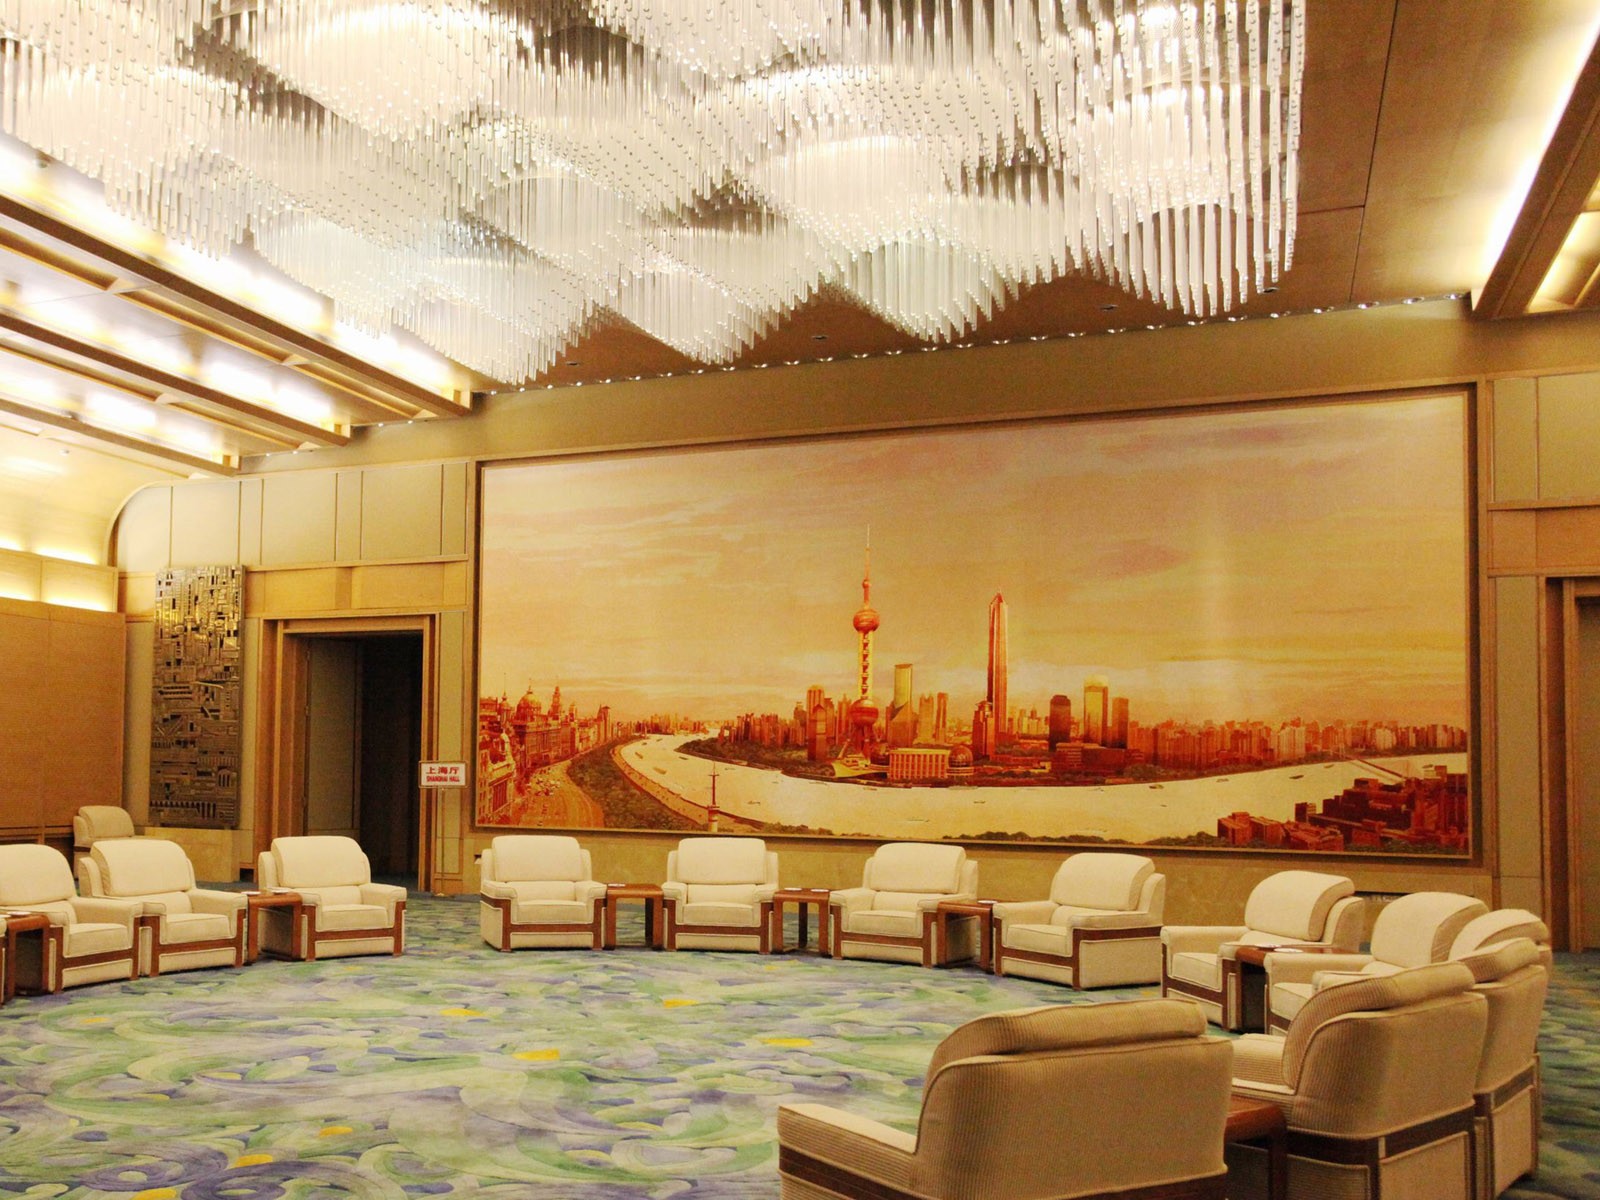 Beijing Tour - Great Hall (ggc works) #5 - 1600x1200